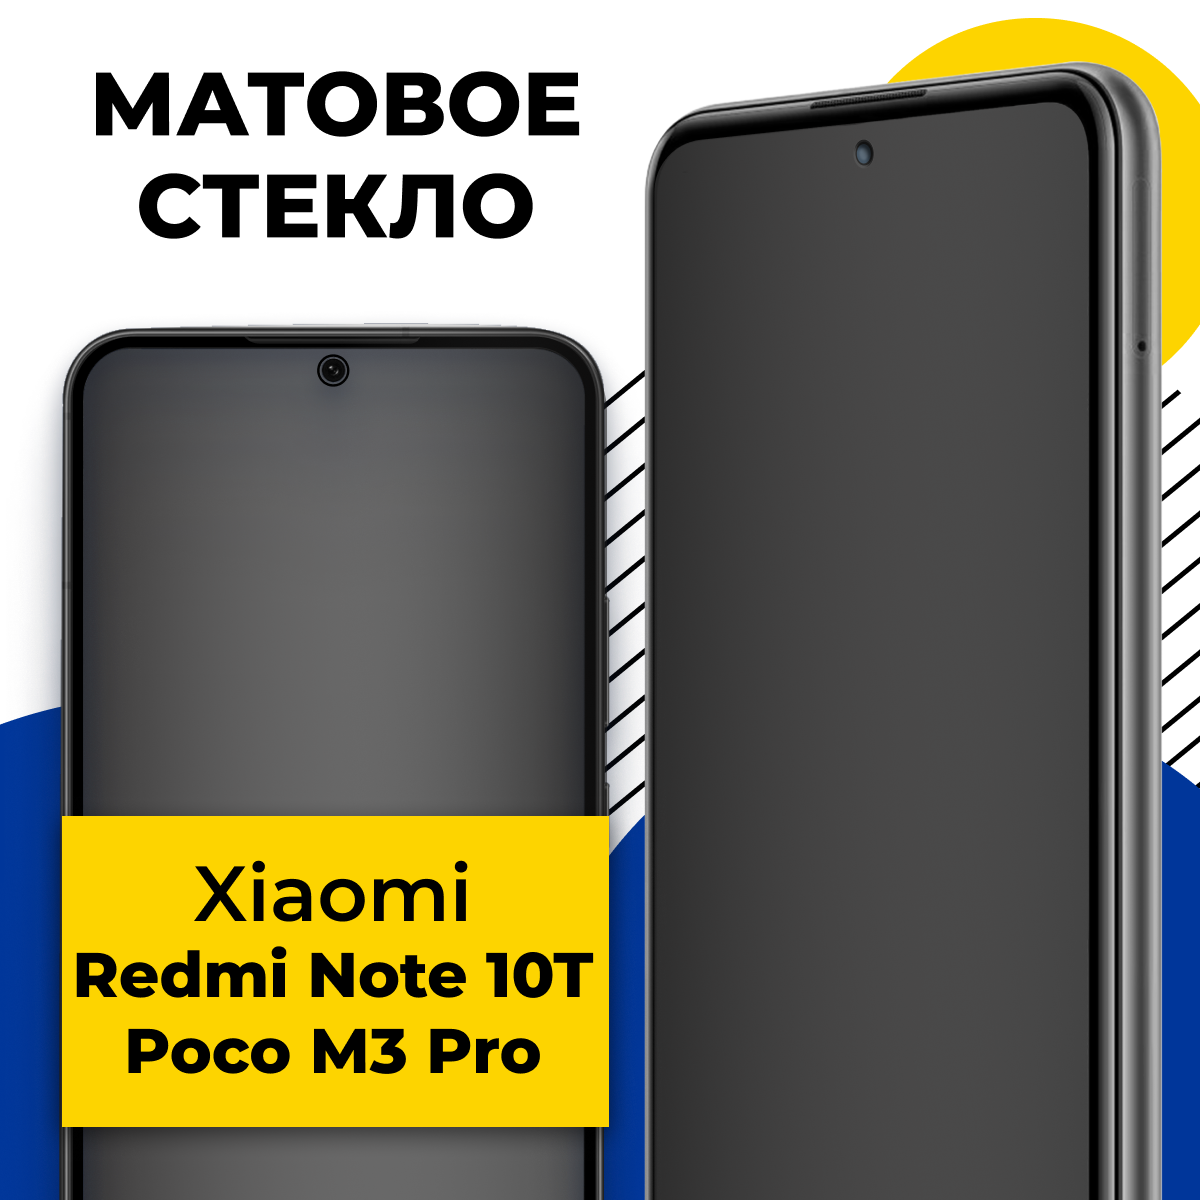 Матовое защитное стекло для телефона Xiaomi Redmi Note 10T и Poco M3 Pro / Противоударное стекло 2.5D на смартфон Сяоми Редми Нот 10Т и Поко М3 Про